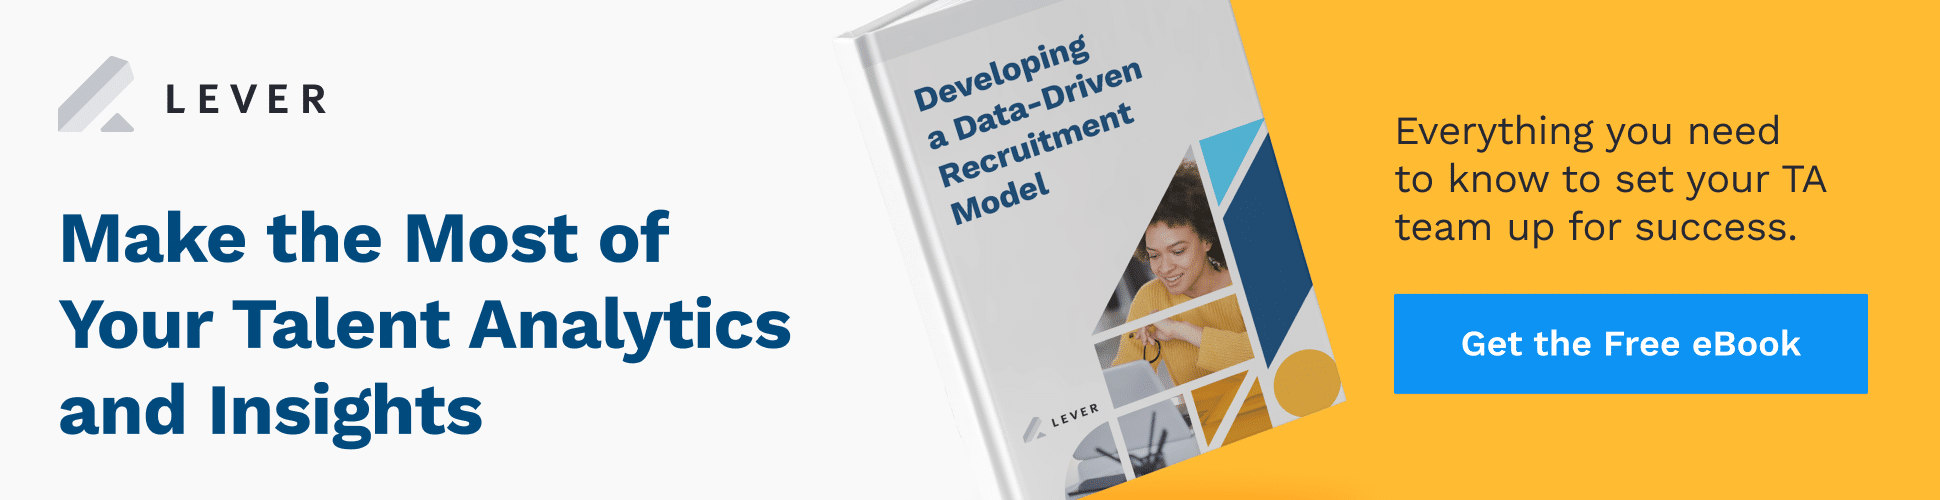 data-driven recruitment model